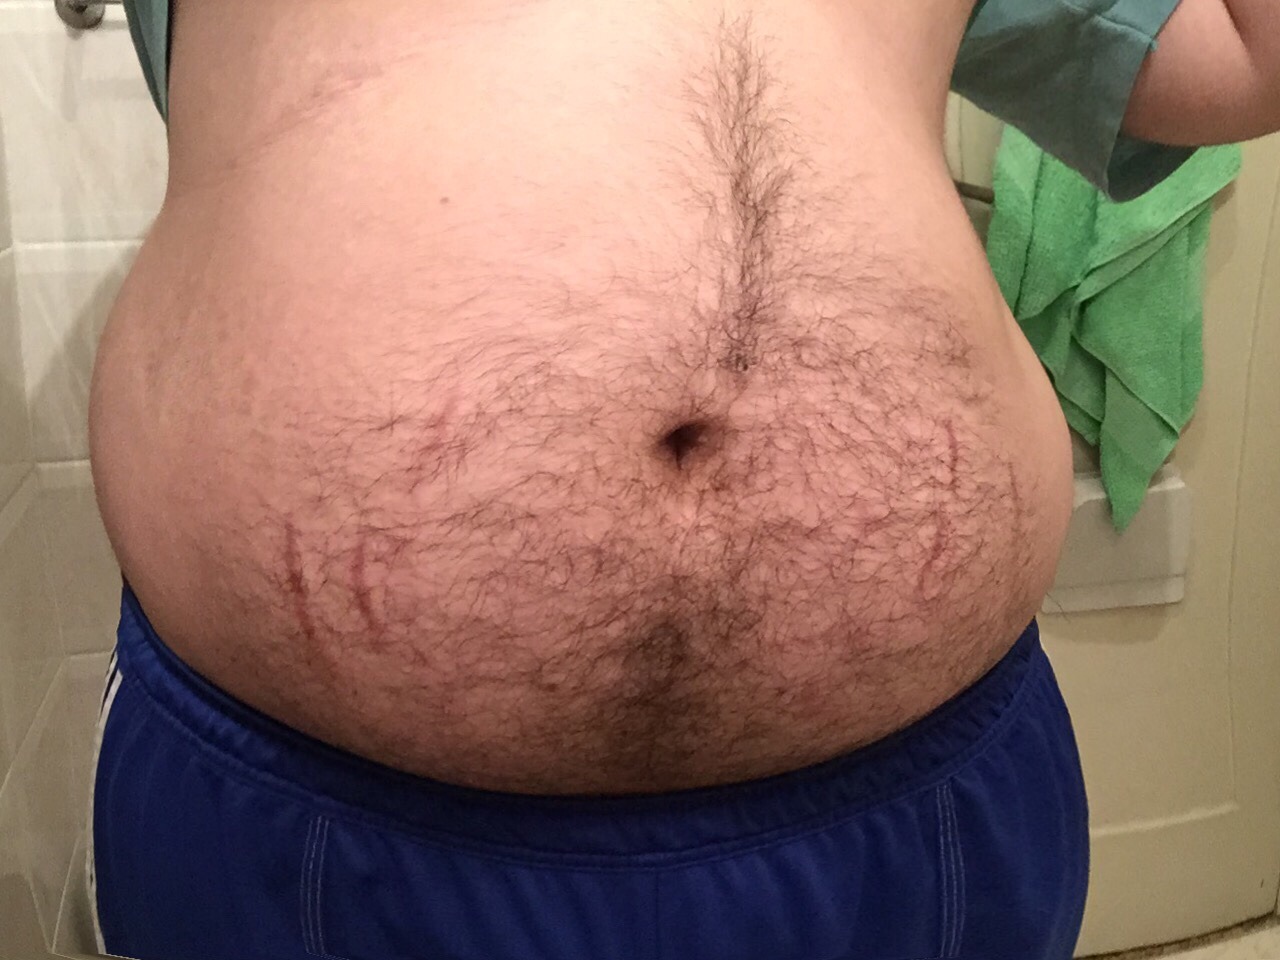 Belly stretch marks porn